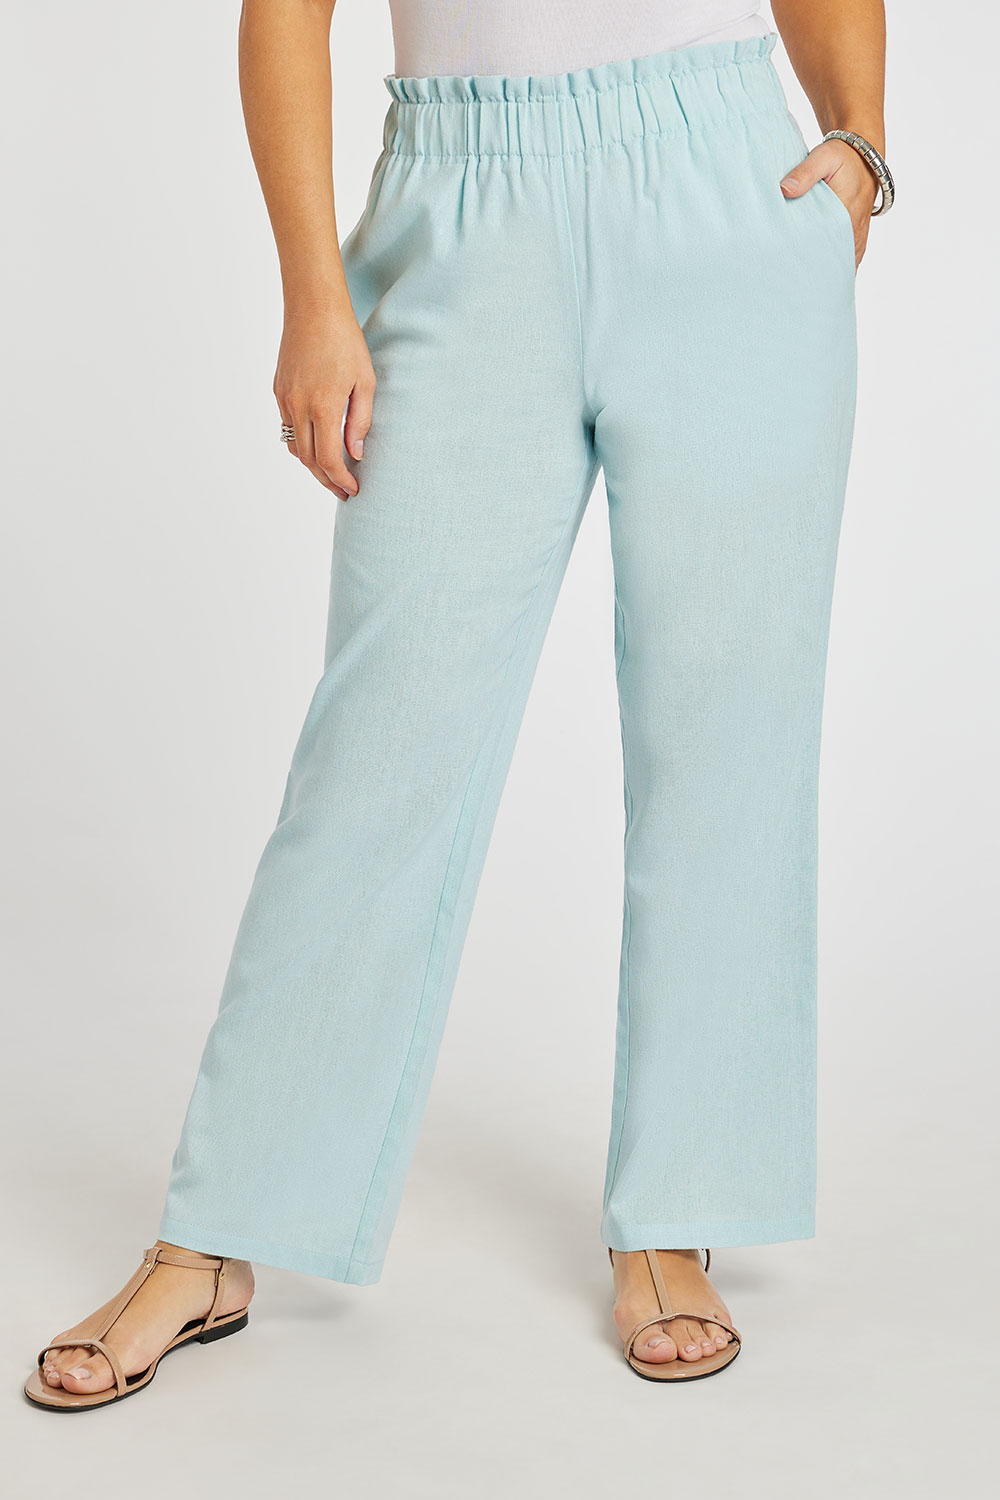 Buy Gap WideLeg Linen Trousers from the Gap online shop